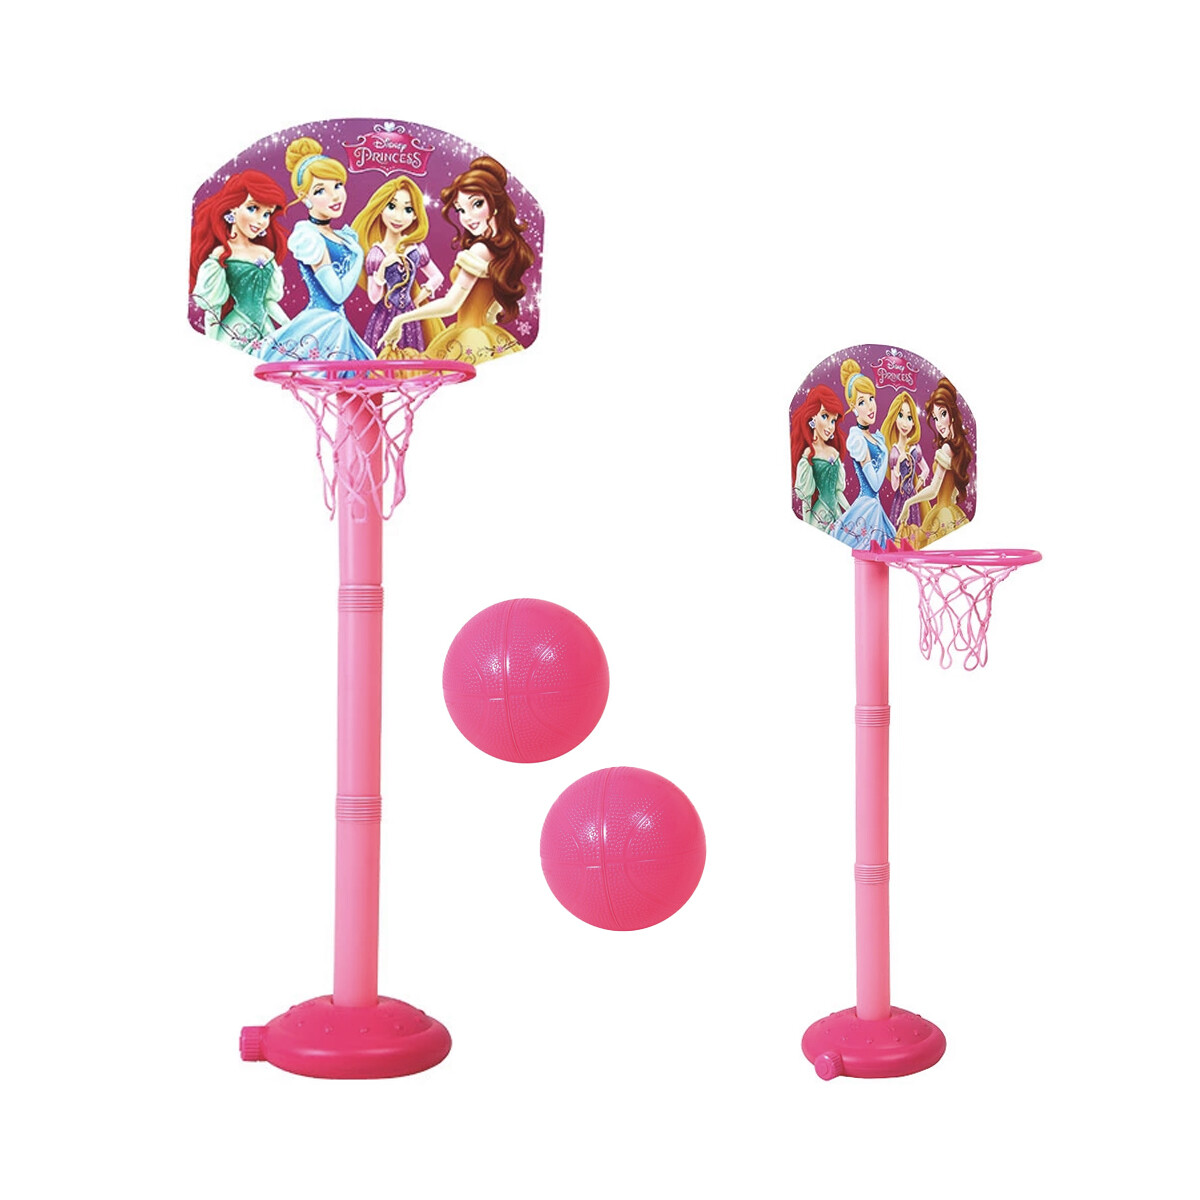 Tablero de Basketball con Pie de Disney Princesas 